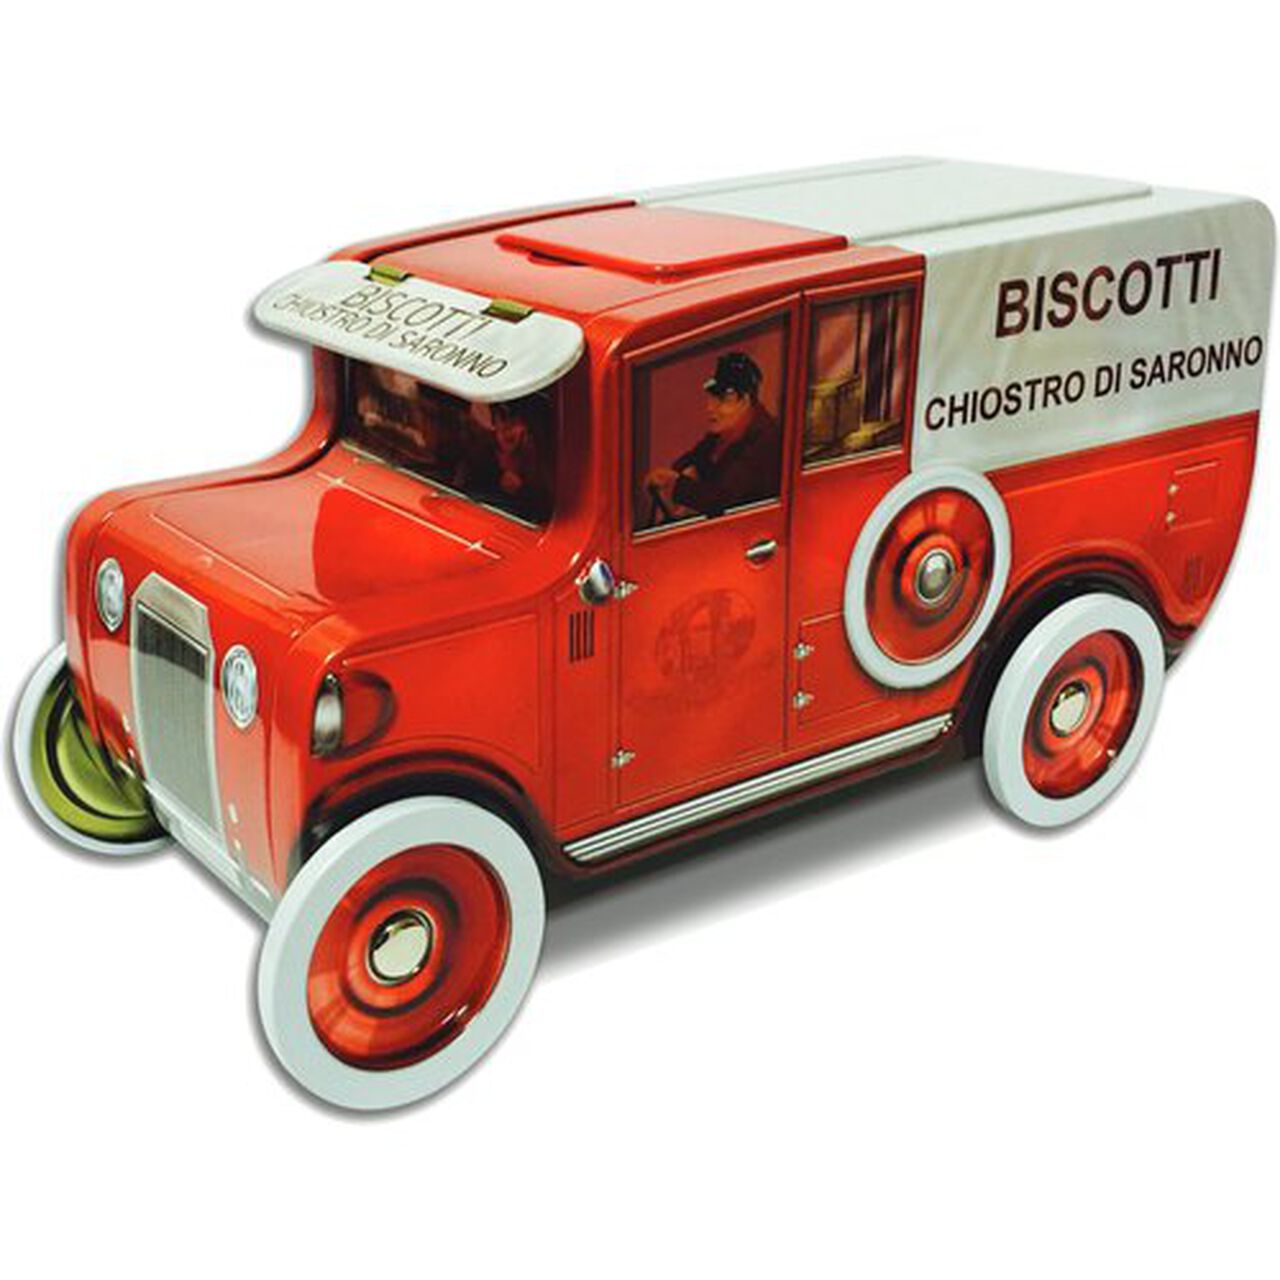 Chiostro Di Saronno Biscotti Cookies in Van Tin 3.52oz, , large image number 0